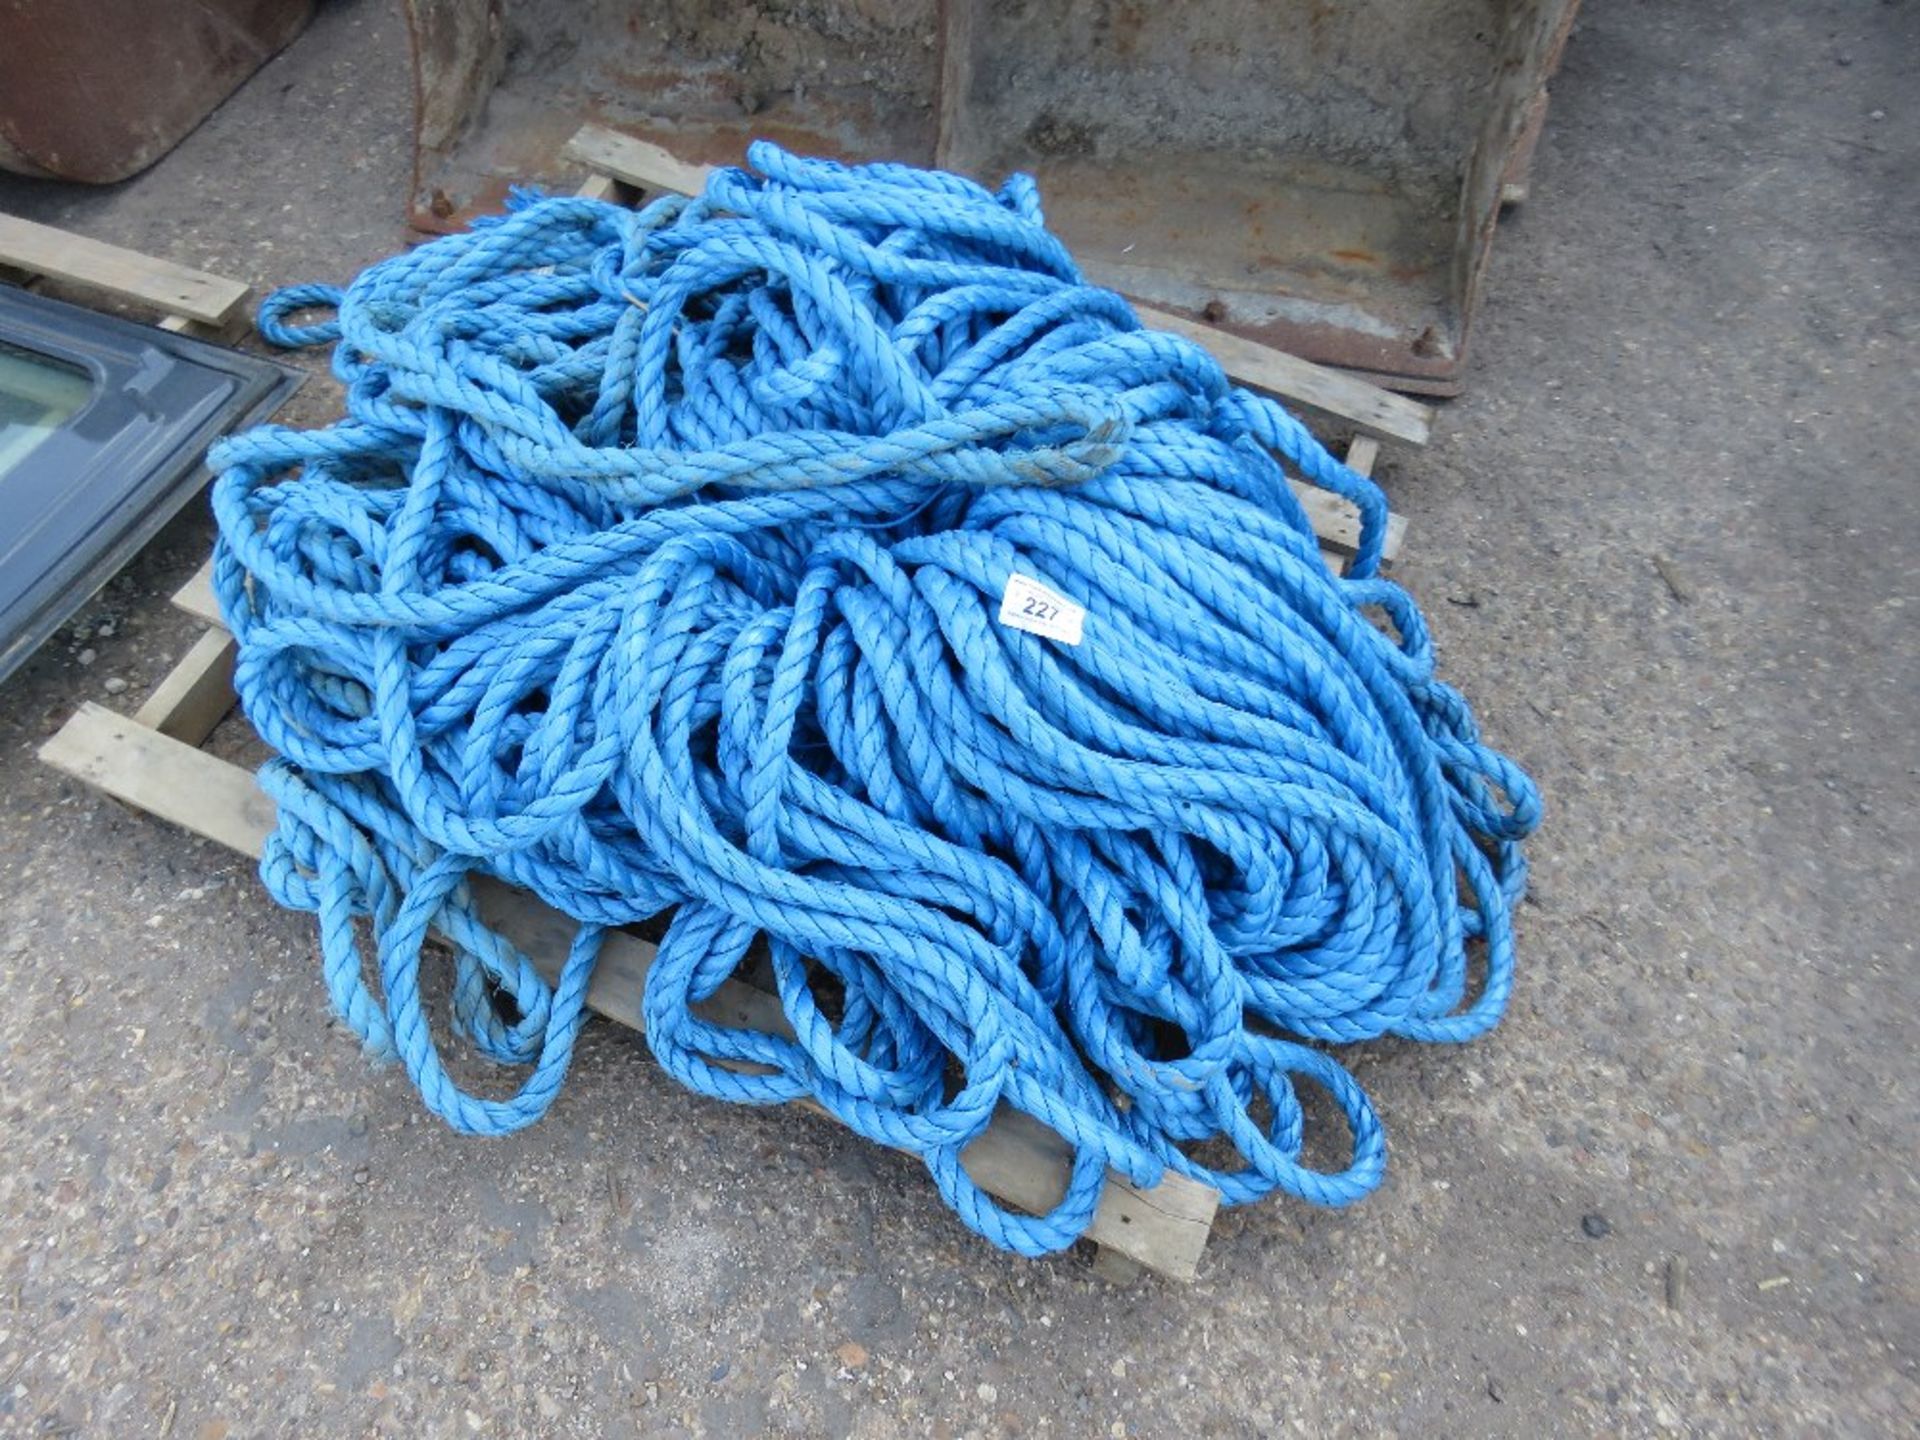 Pallet of heavy duty nylon rope